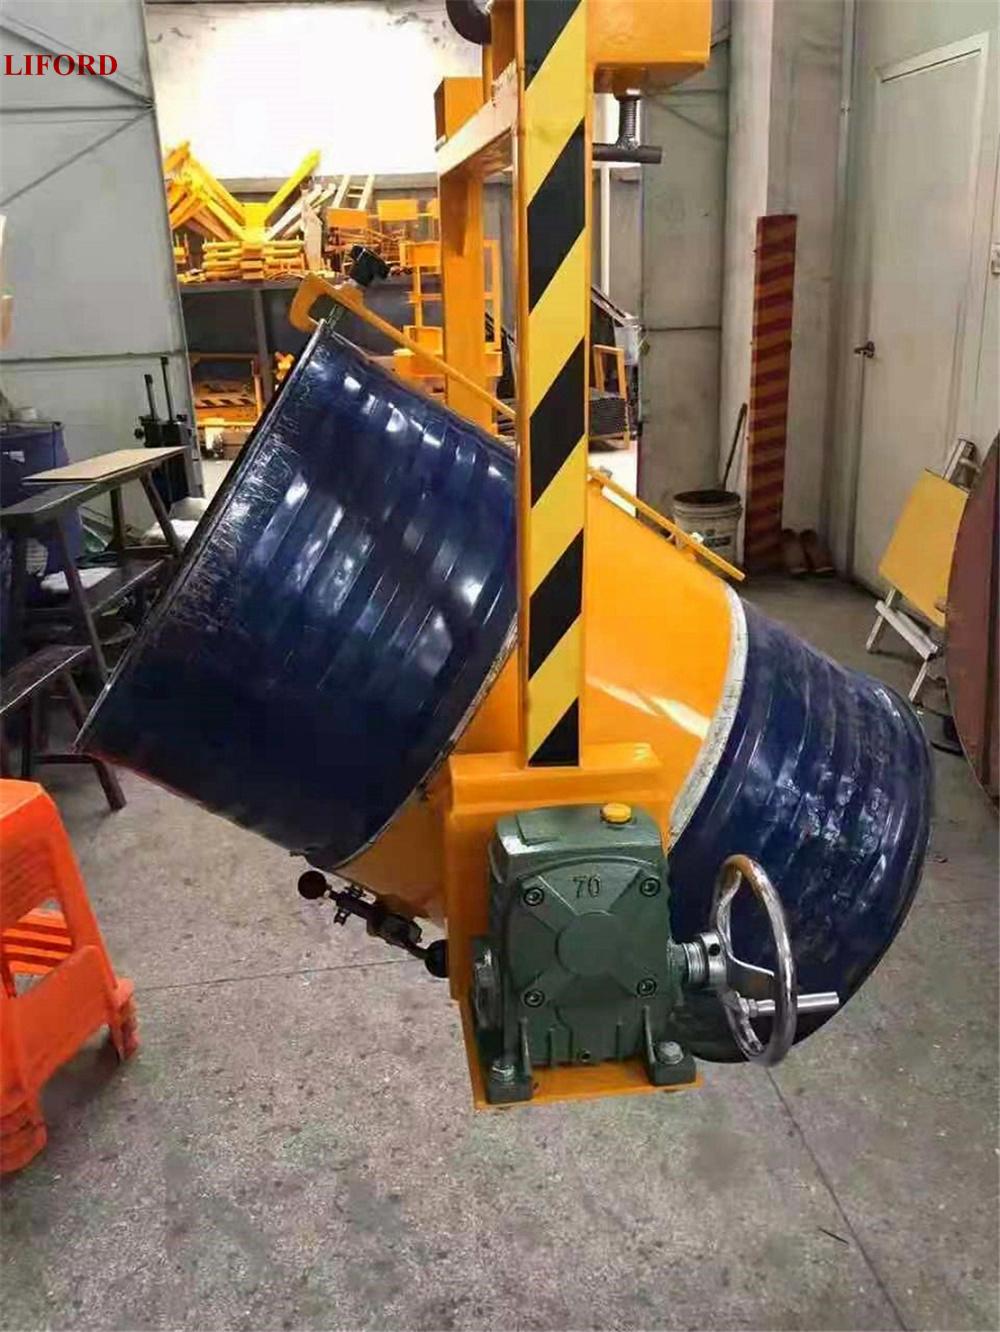 400kg Forklift Accessories Vertical Drum Lifters/Dispensers Drum Handling Lm800